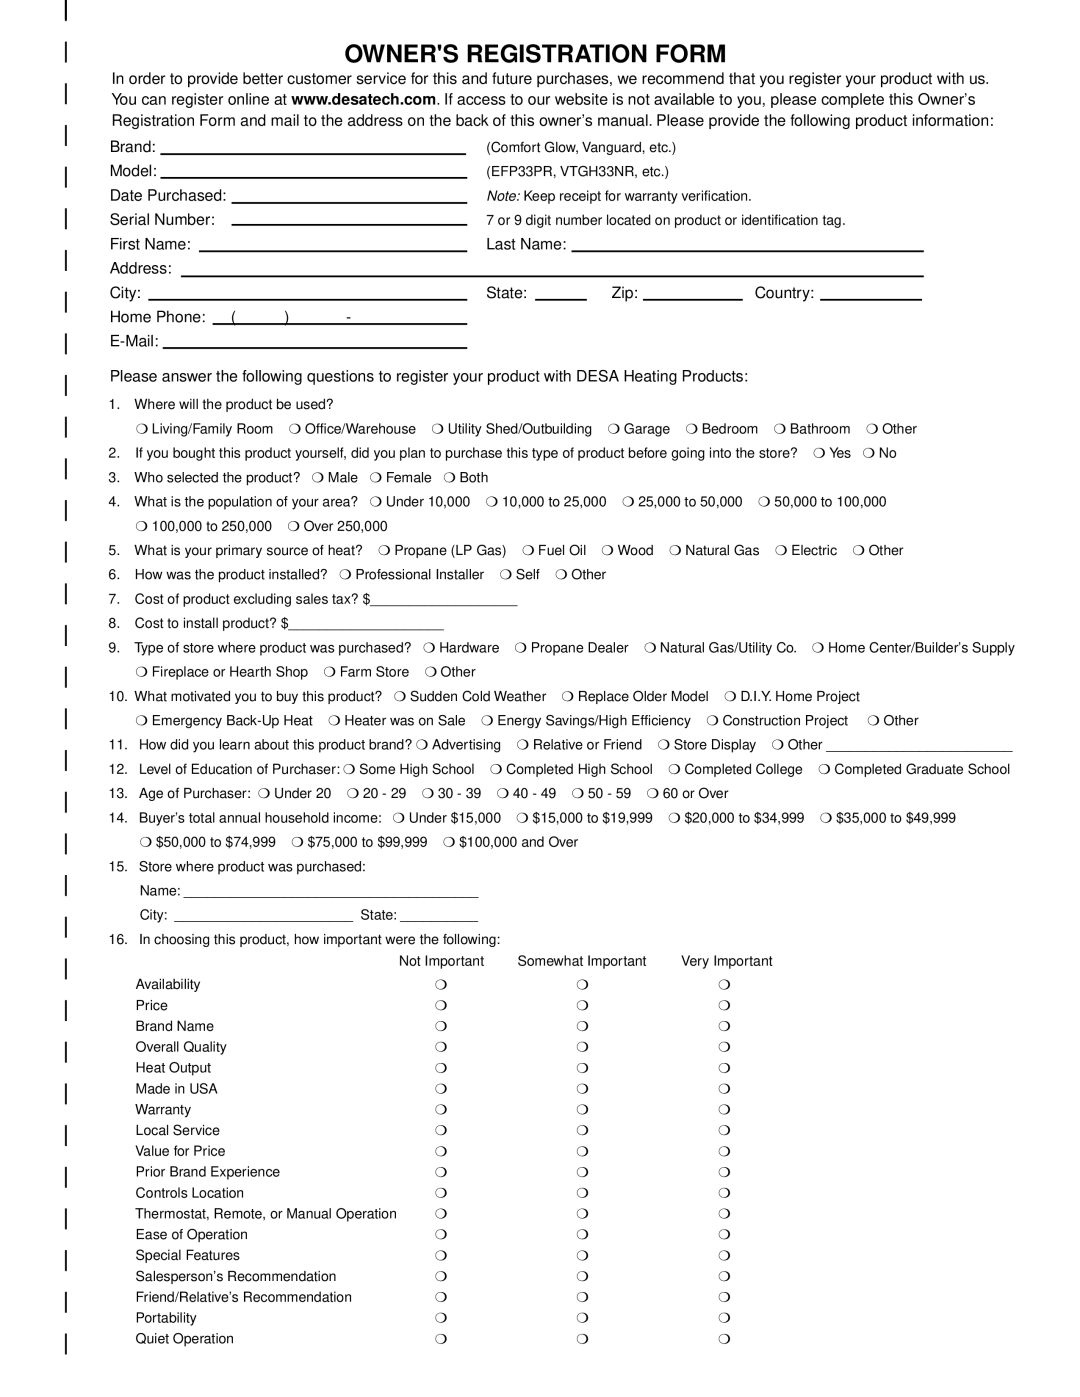 Desa CGEFP33NRB, CGEFP33PRB installation manual Owners Registration Form 